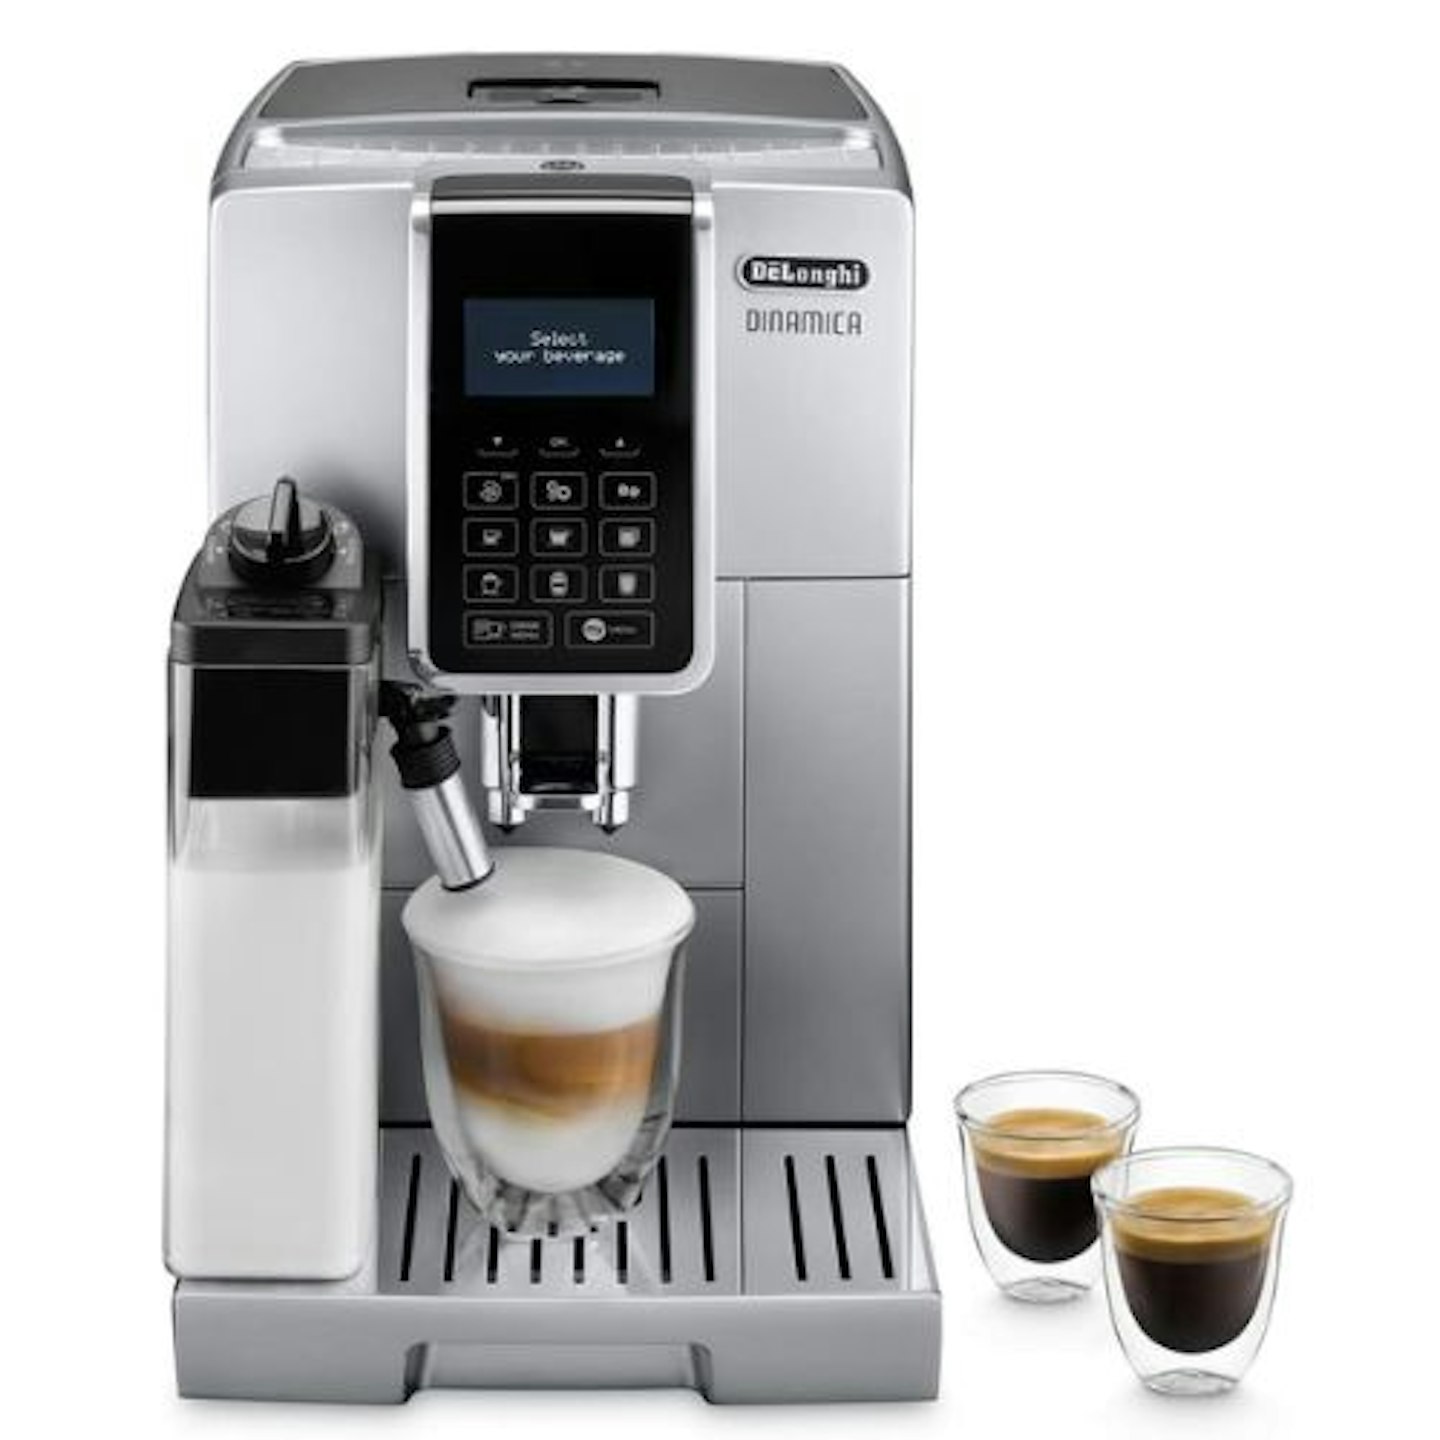 De'Longhi Dinamica, Fully Automatic Bean to Cup Coffee Machine, Cappuccino, Espresso Coffee Maker, ECAM 350.75.S, Silver